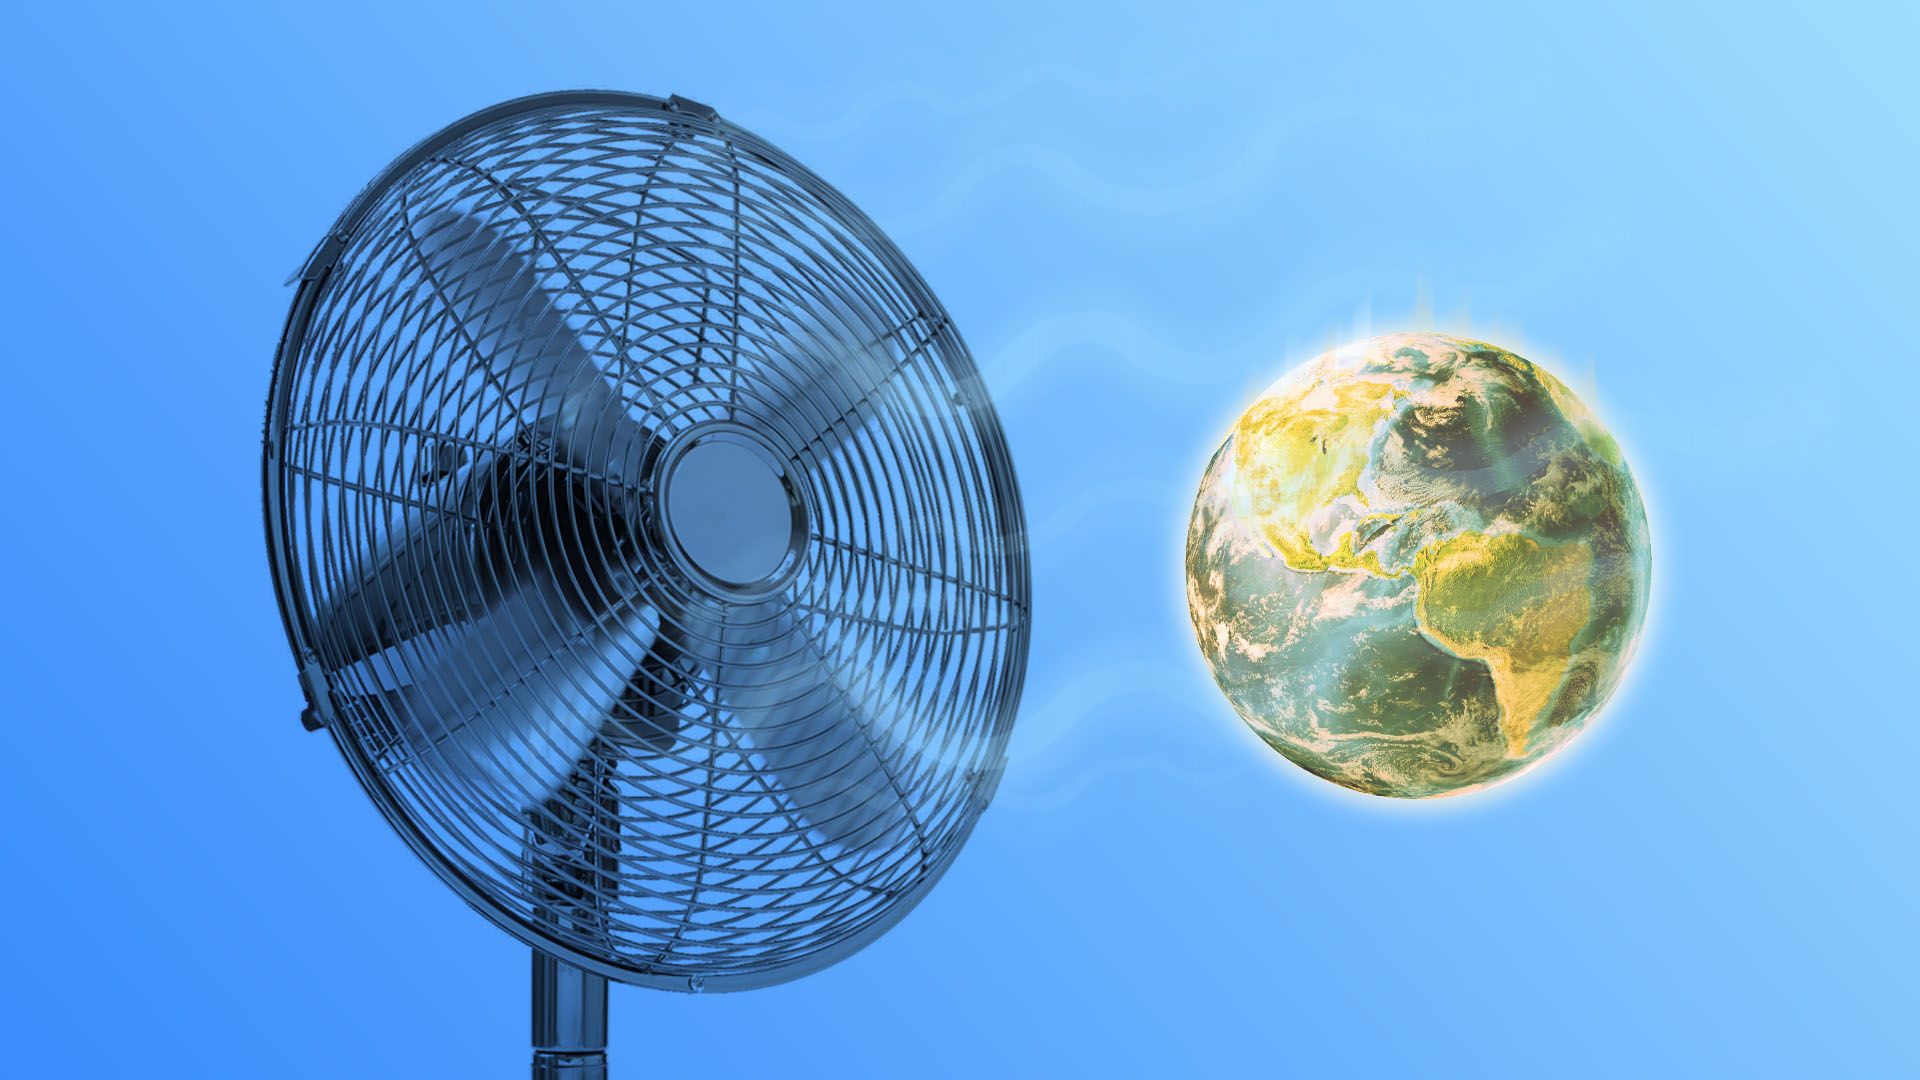 A fan blowing on Earth to cool it down